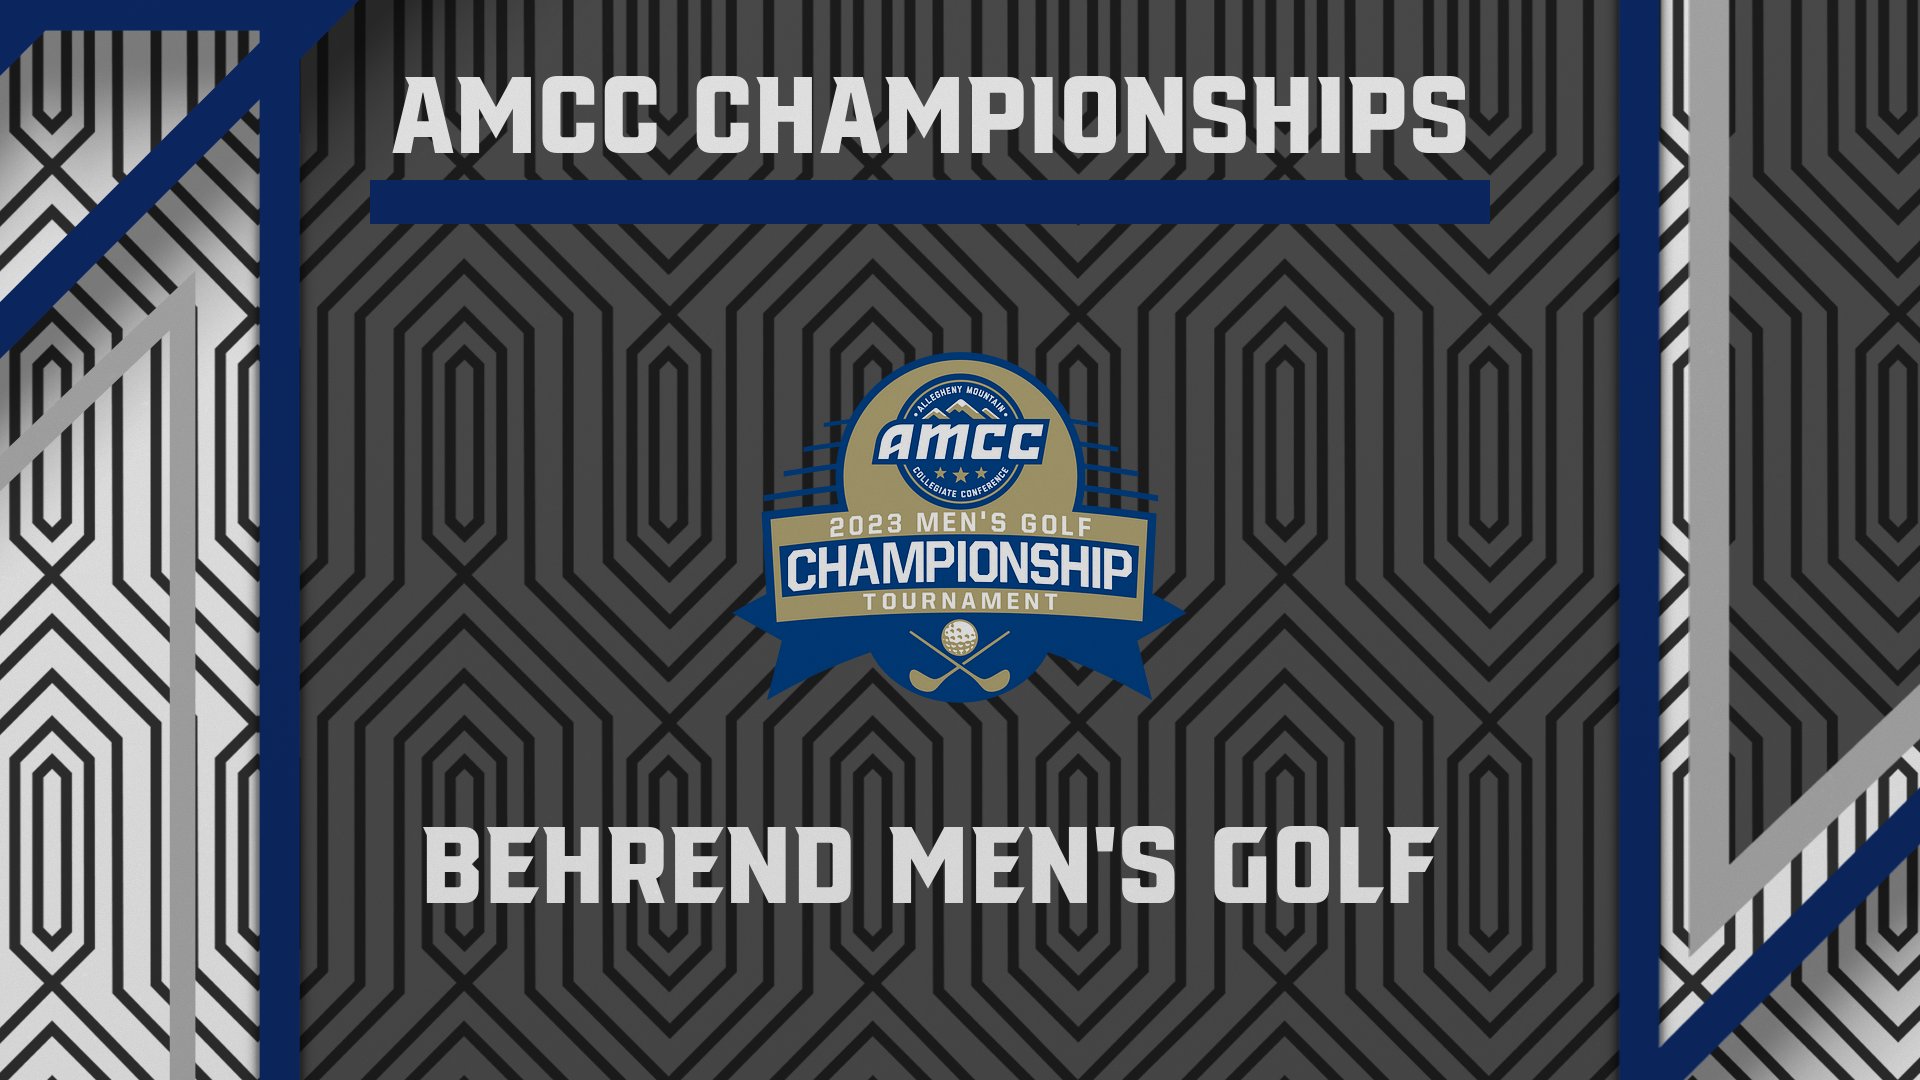 Behrend Men's Golf AMCC Championship Preview